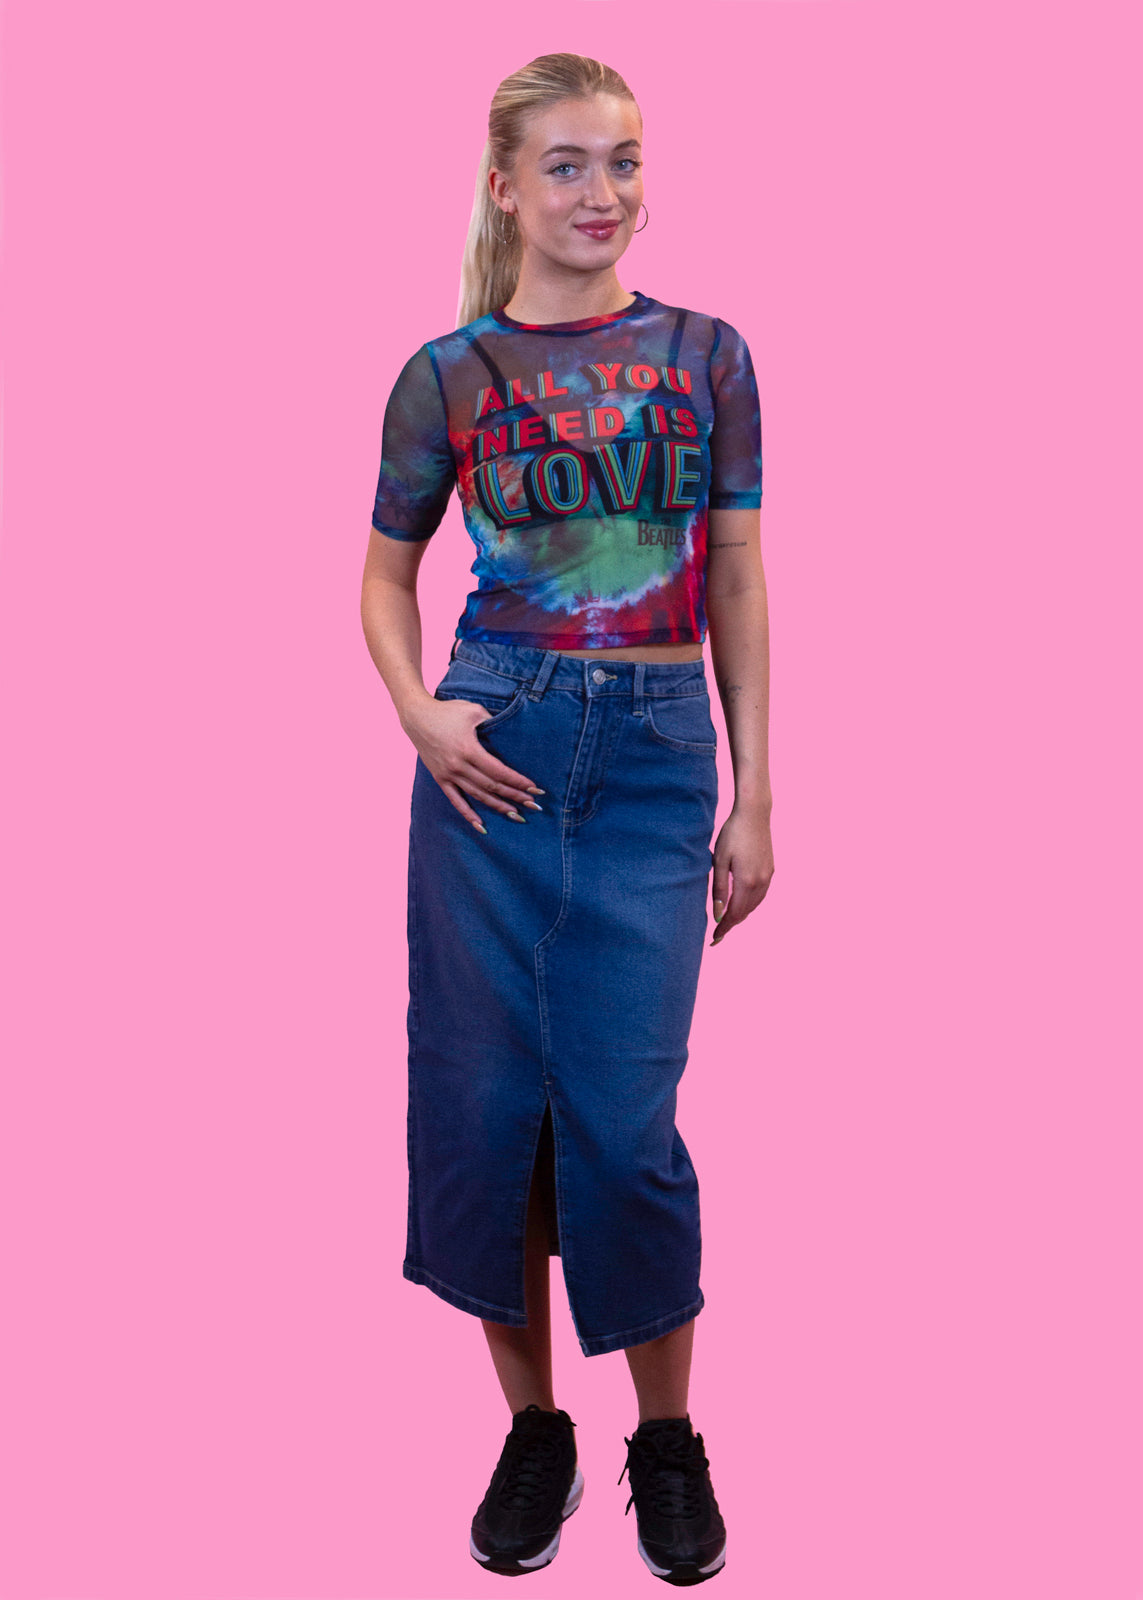 Noisy May - Blue Washed Denim Midi Skirt with Front Slit